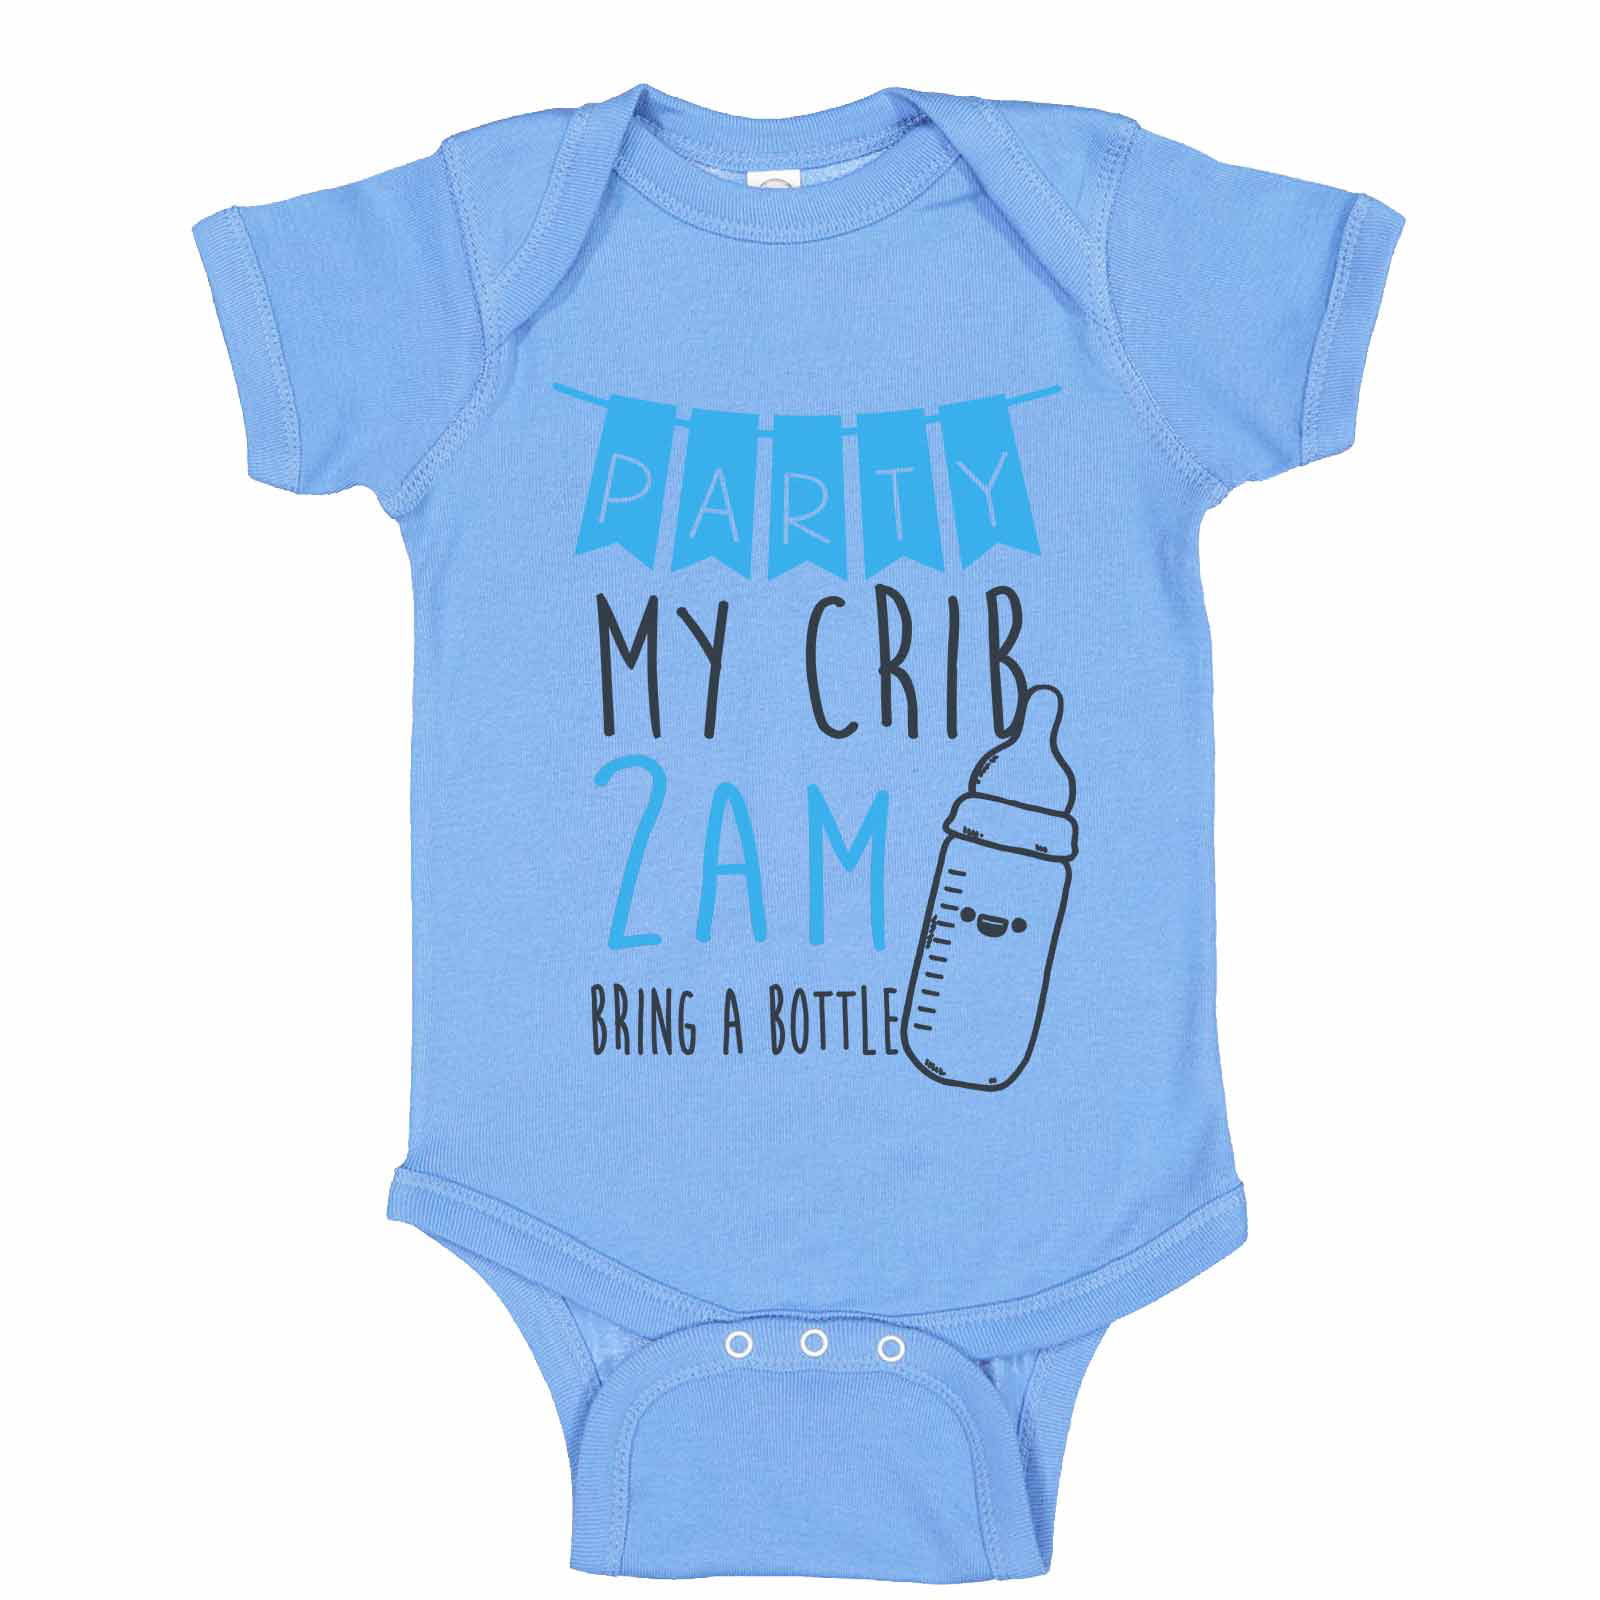 Funny Baby Bodysuit "Party My Crib 2am bring a Bottle" Babygrow Newborn Gift 